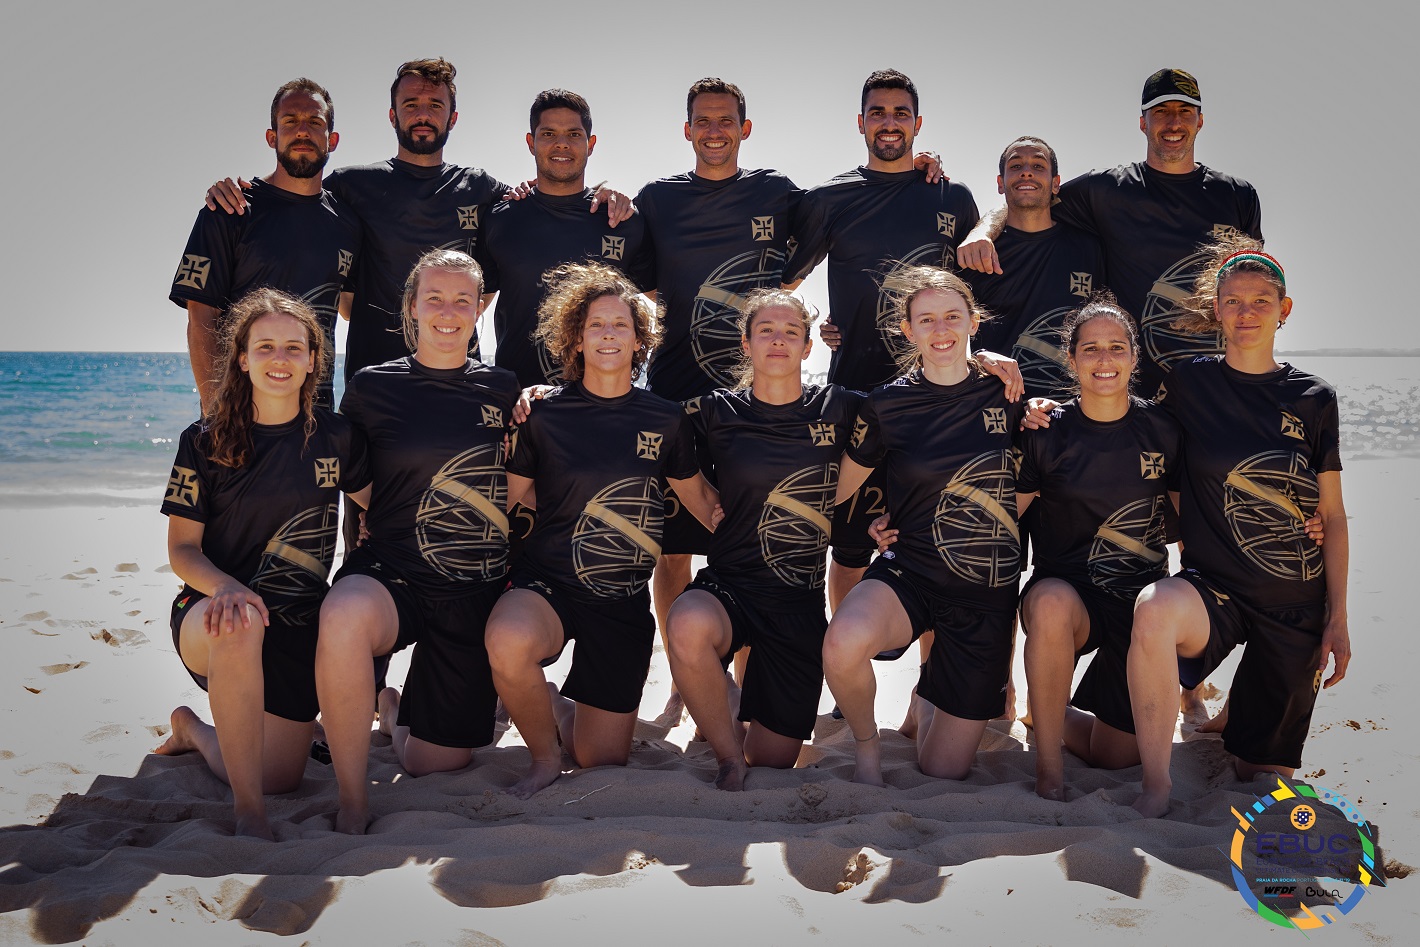 Portugal conquista 4º lugar no campeonato Europeu de Ultimate de Praia (Frisbee)